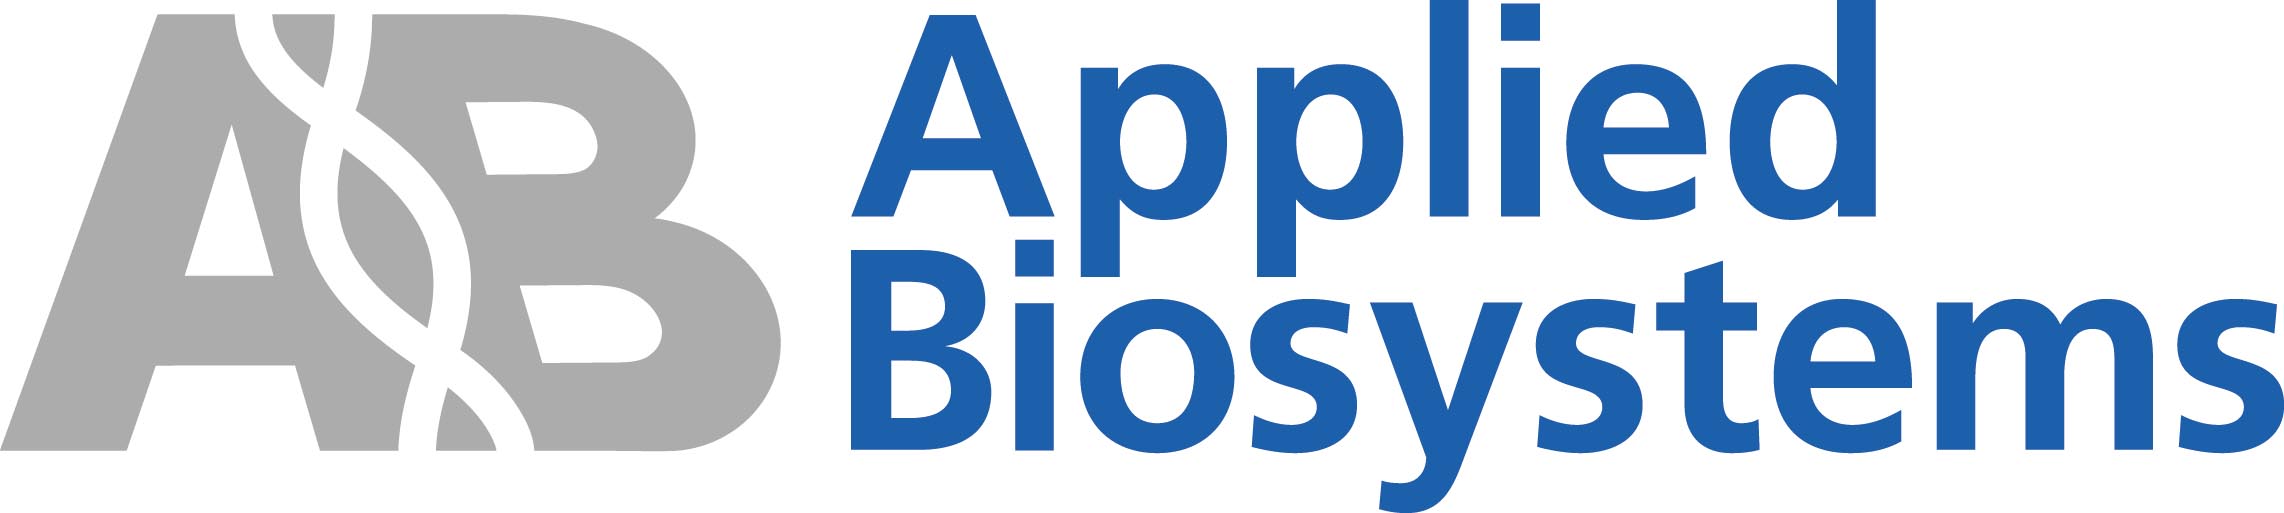 logo Applied Biosystems